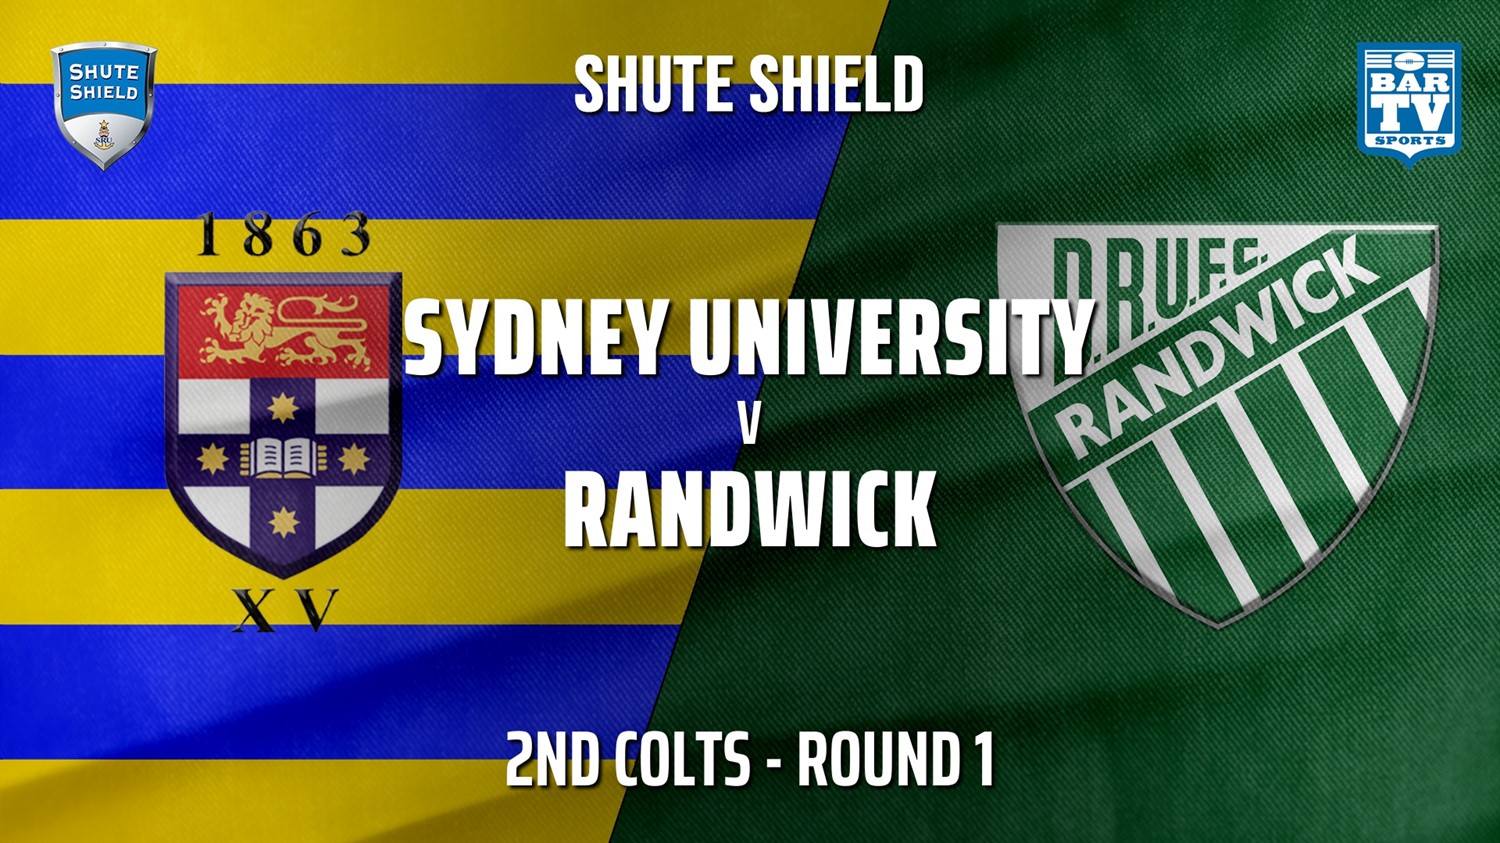 Shute Shield Round 1 - 2nd Colts - Sydney University v Randwick Minigame Slate Image